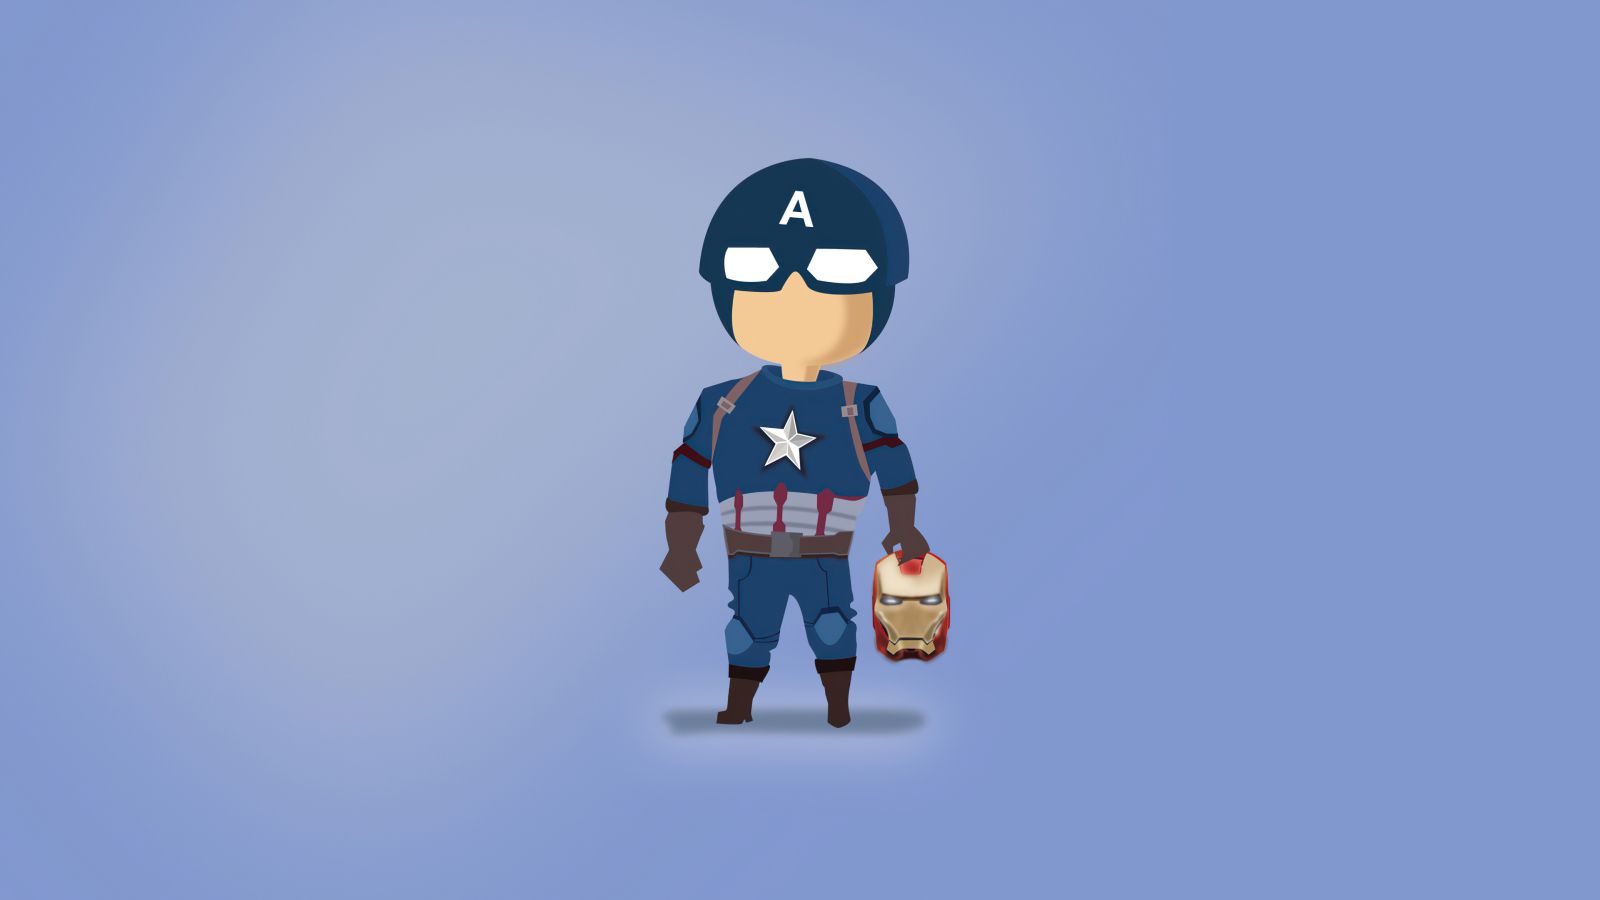 Captain America Minimal Marvel 1600x900 Resolution Wallpaper, HD Minimalist 4K Wallpaper, Image, Photo and Background